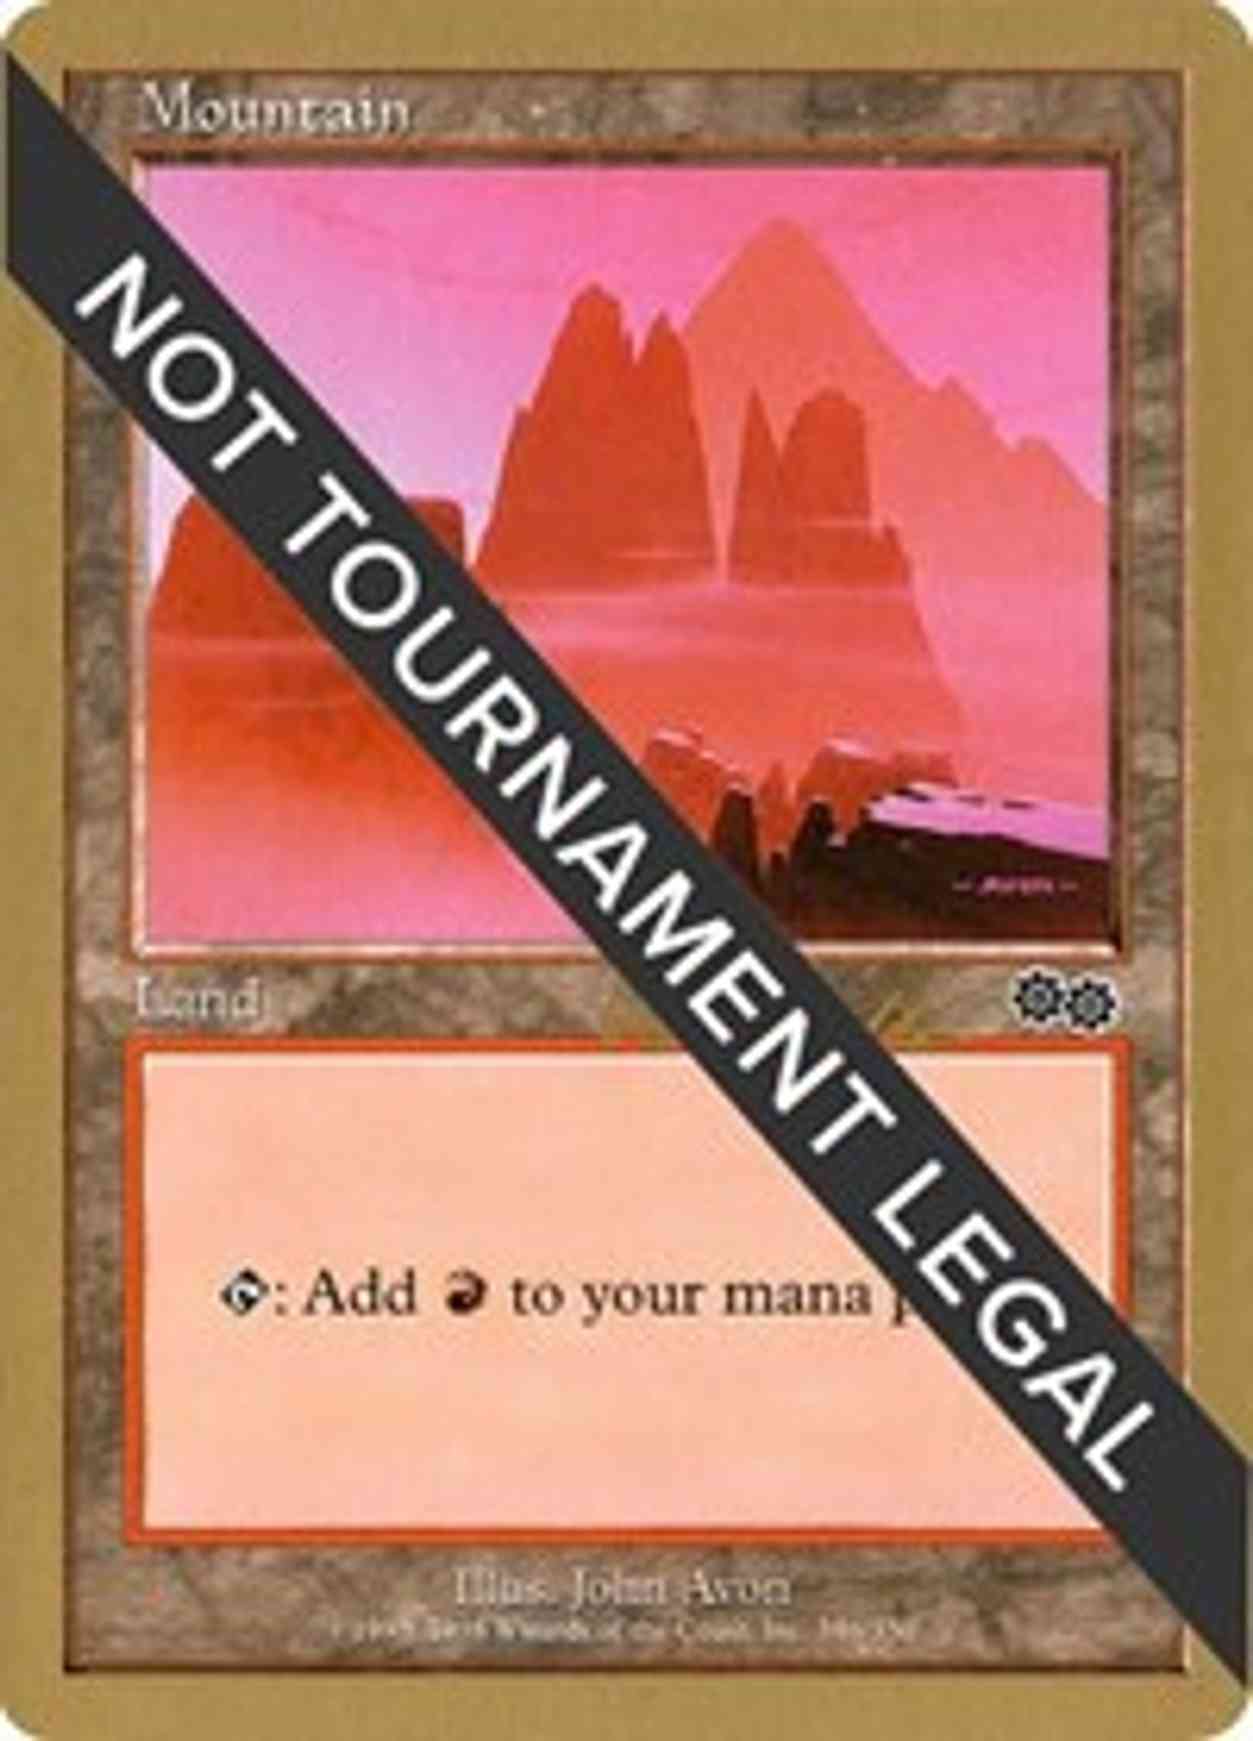 Mountain (346) - 1999 Kai Budde (USG) magic card front